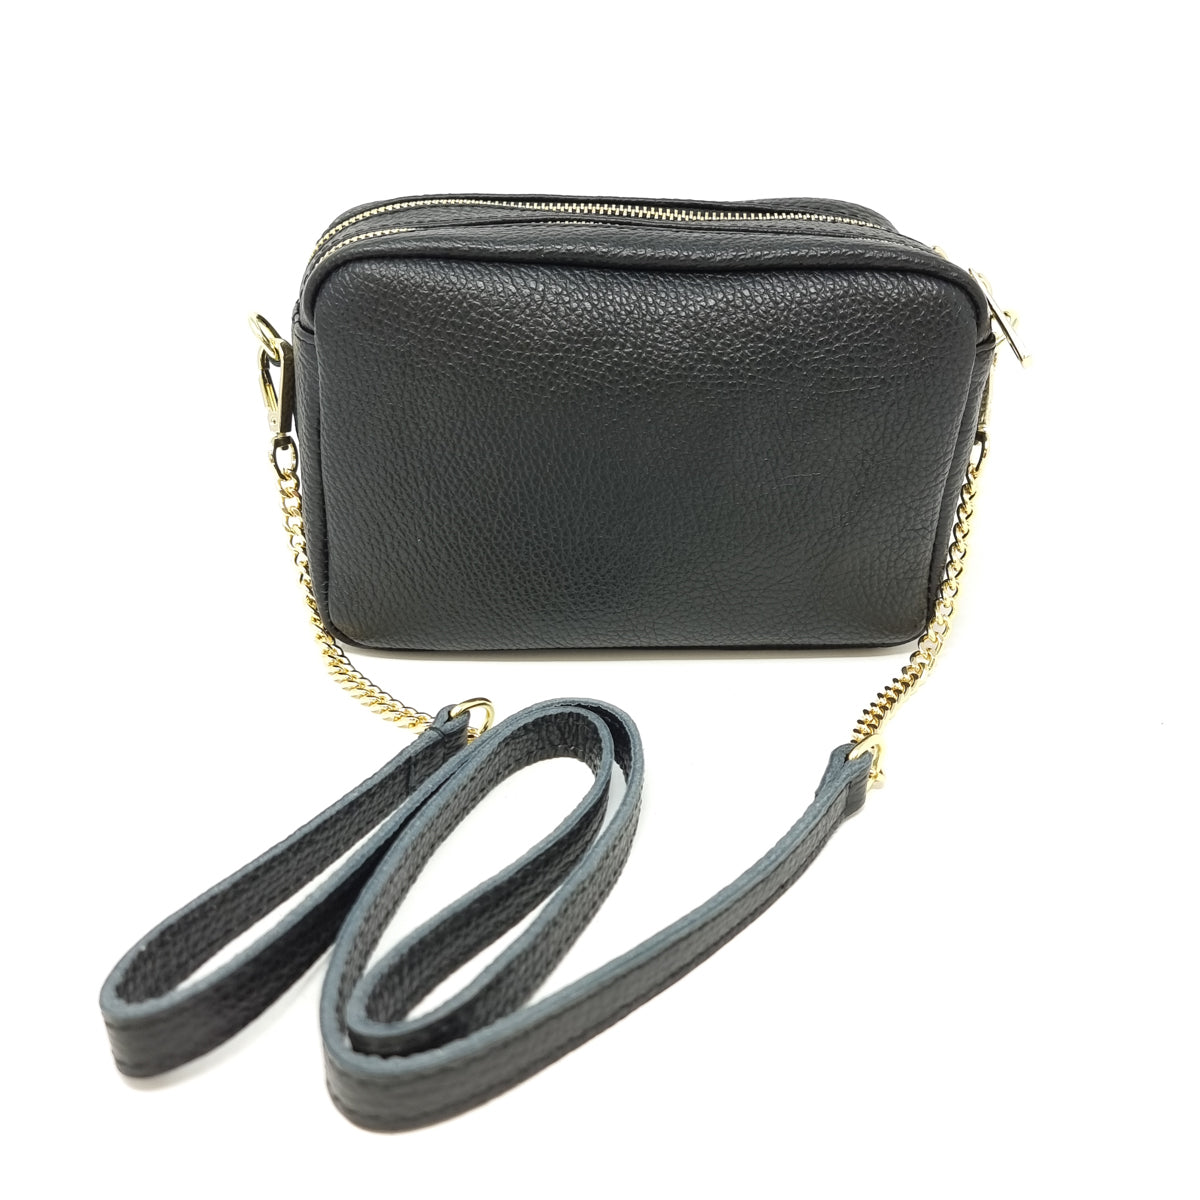 Leather Camera Bag in Black